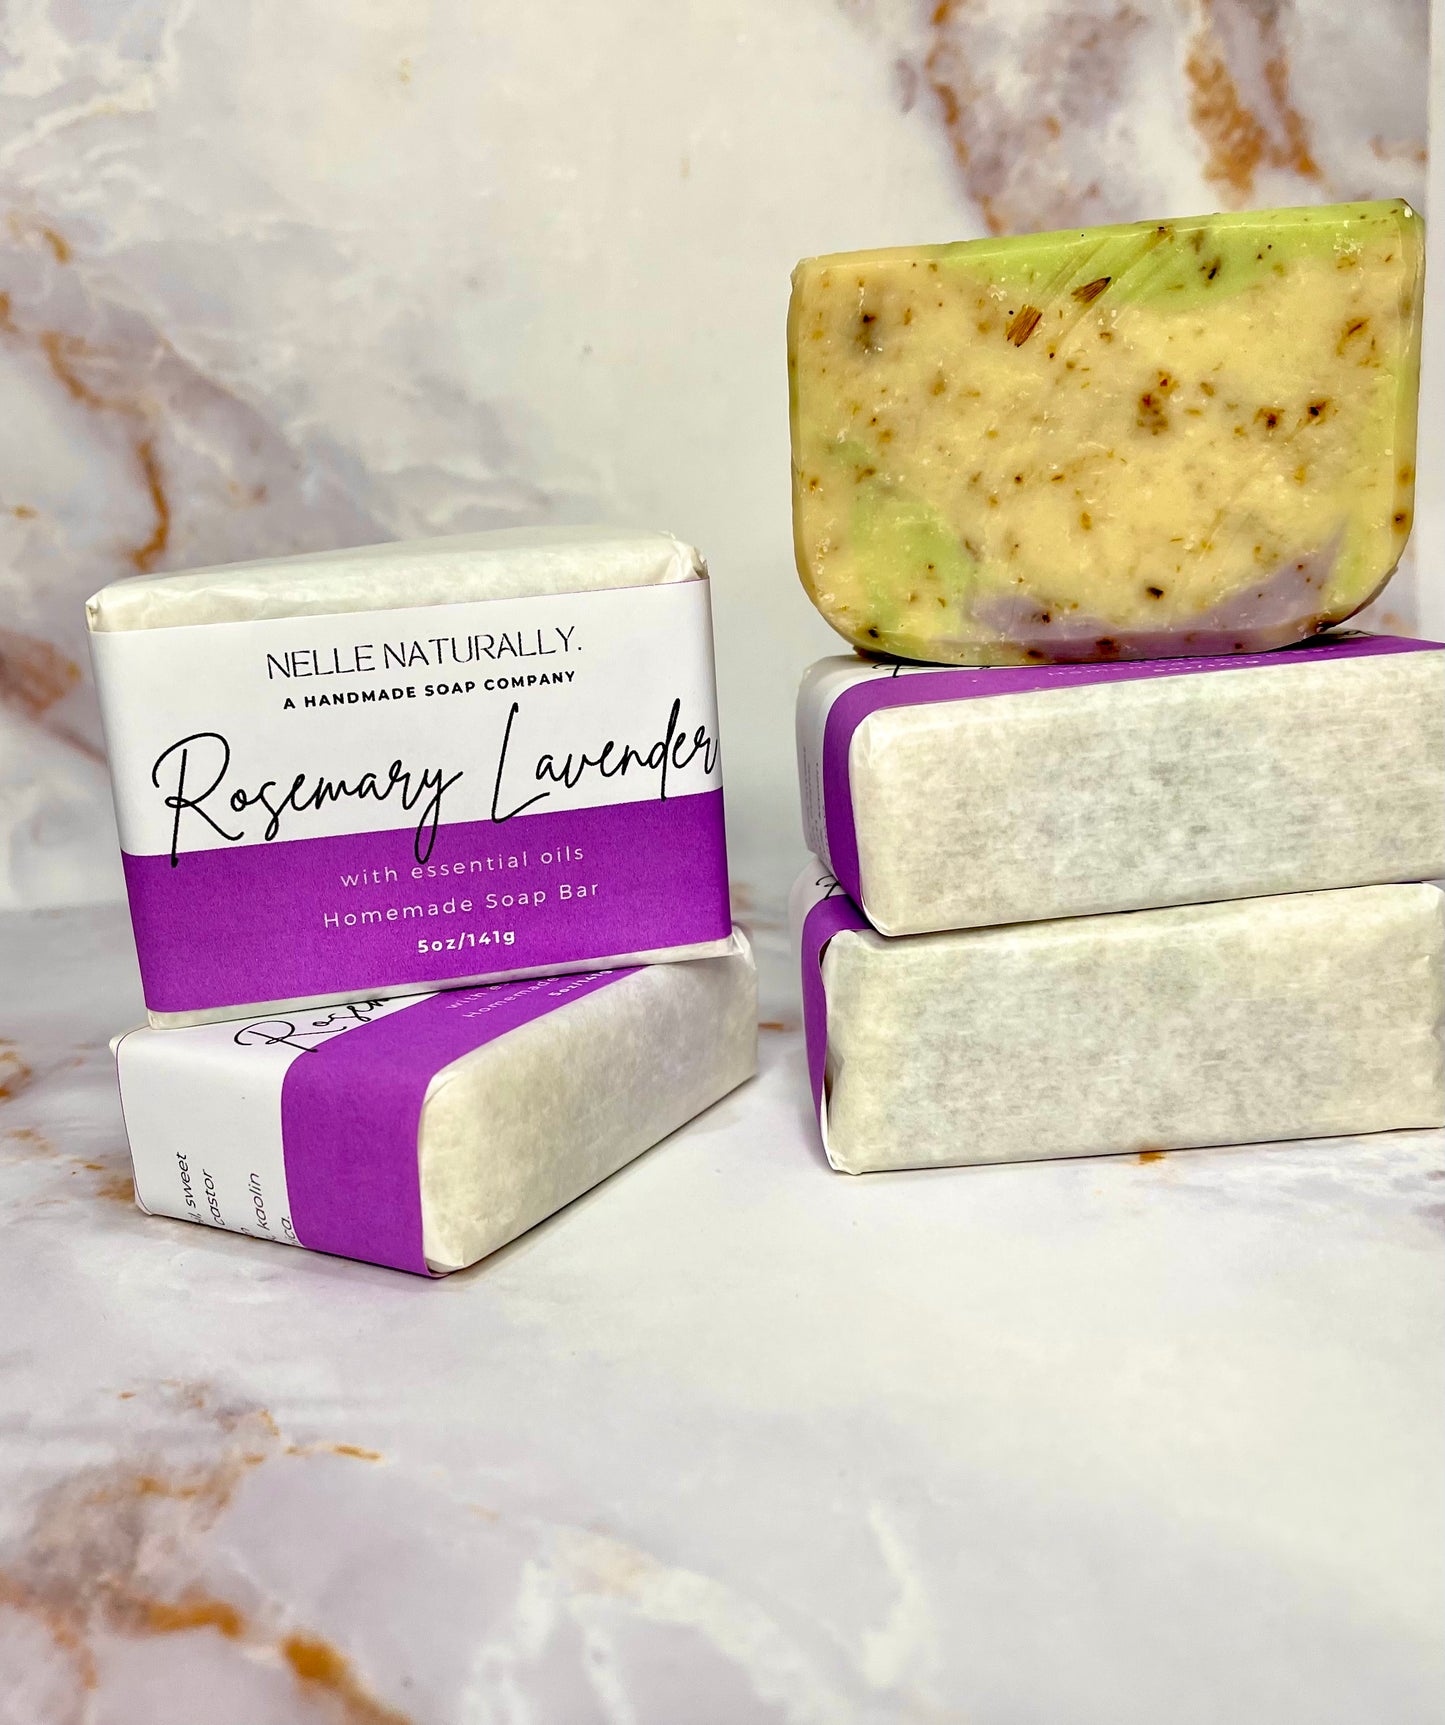 Rosemary Lavender soap bar